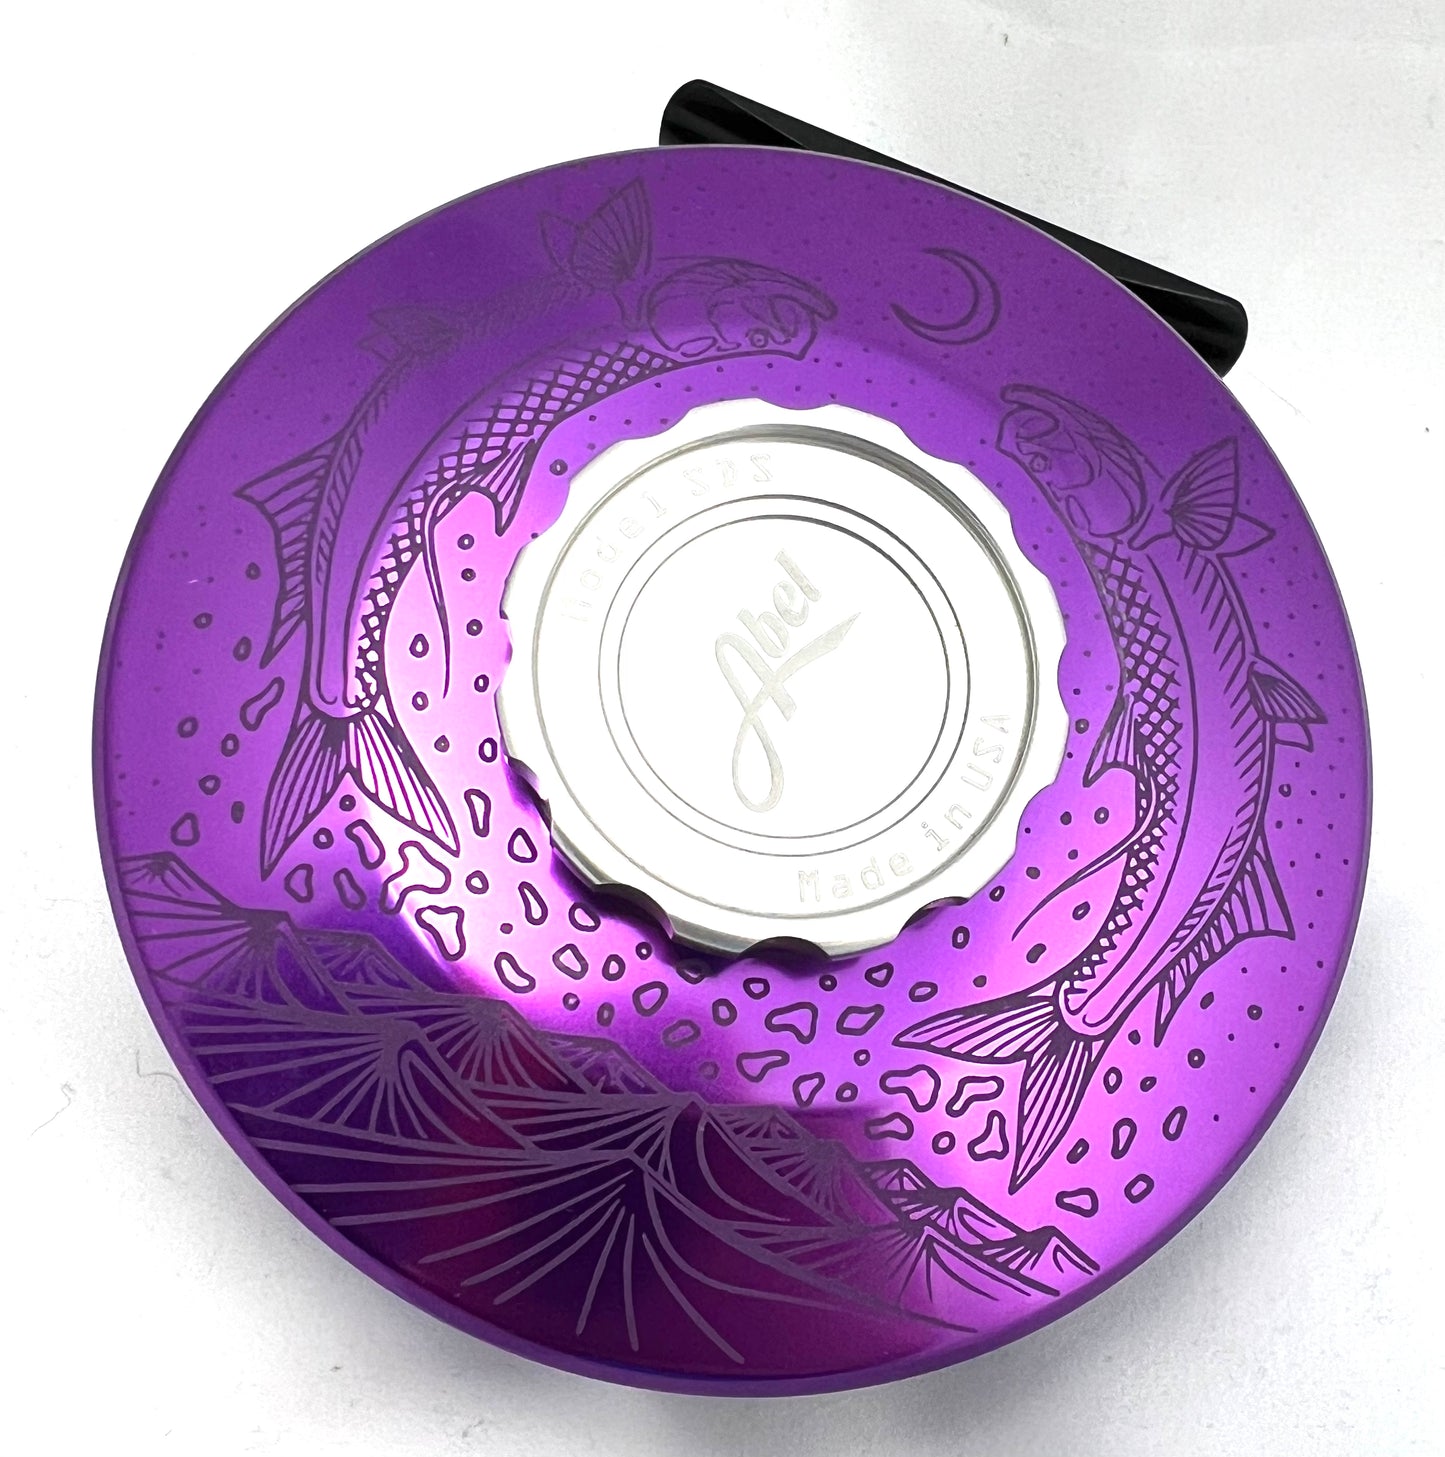 Abel SDS 9/10-Solid, Purple Finish, Moondance Engraving w/ Platinum Drag Knob